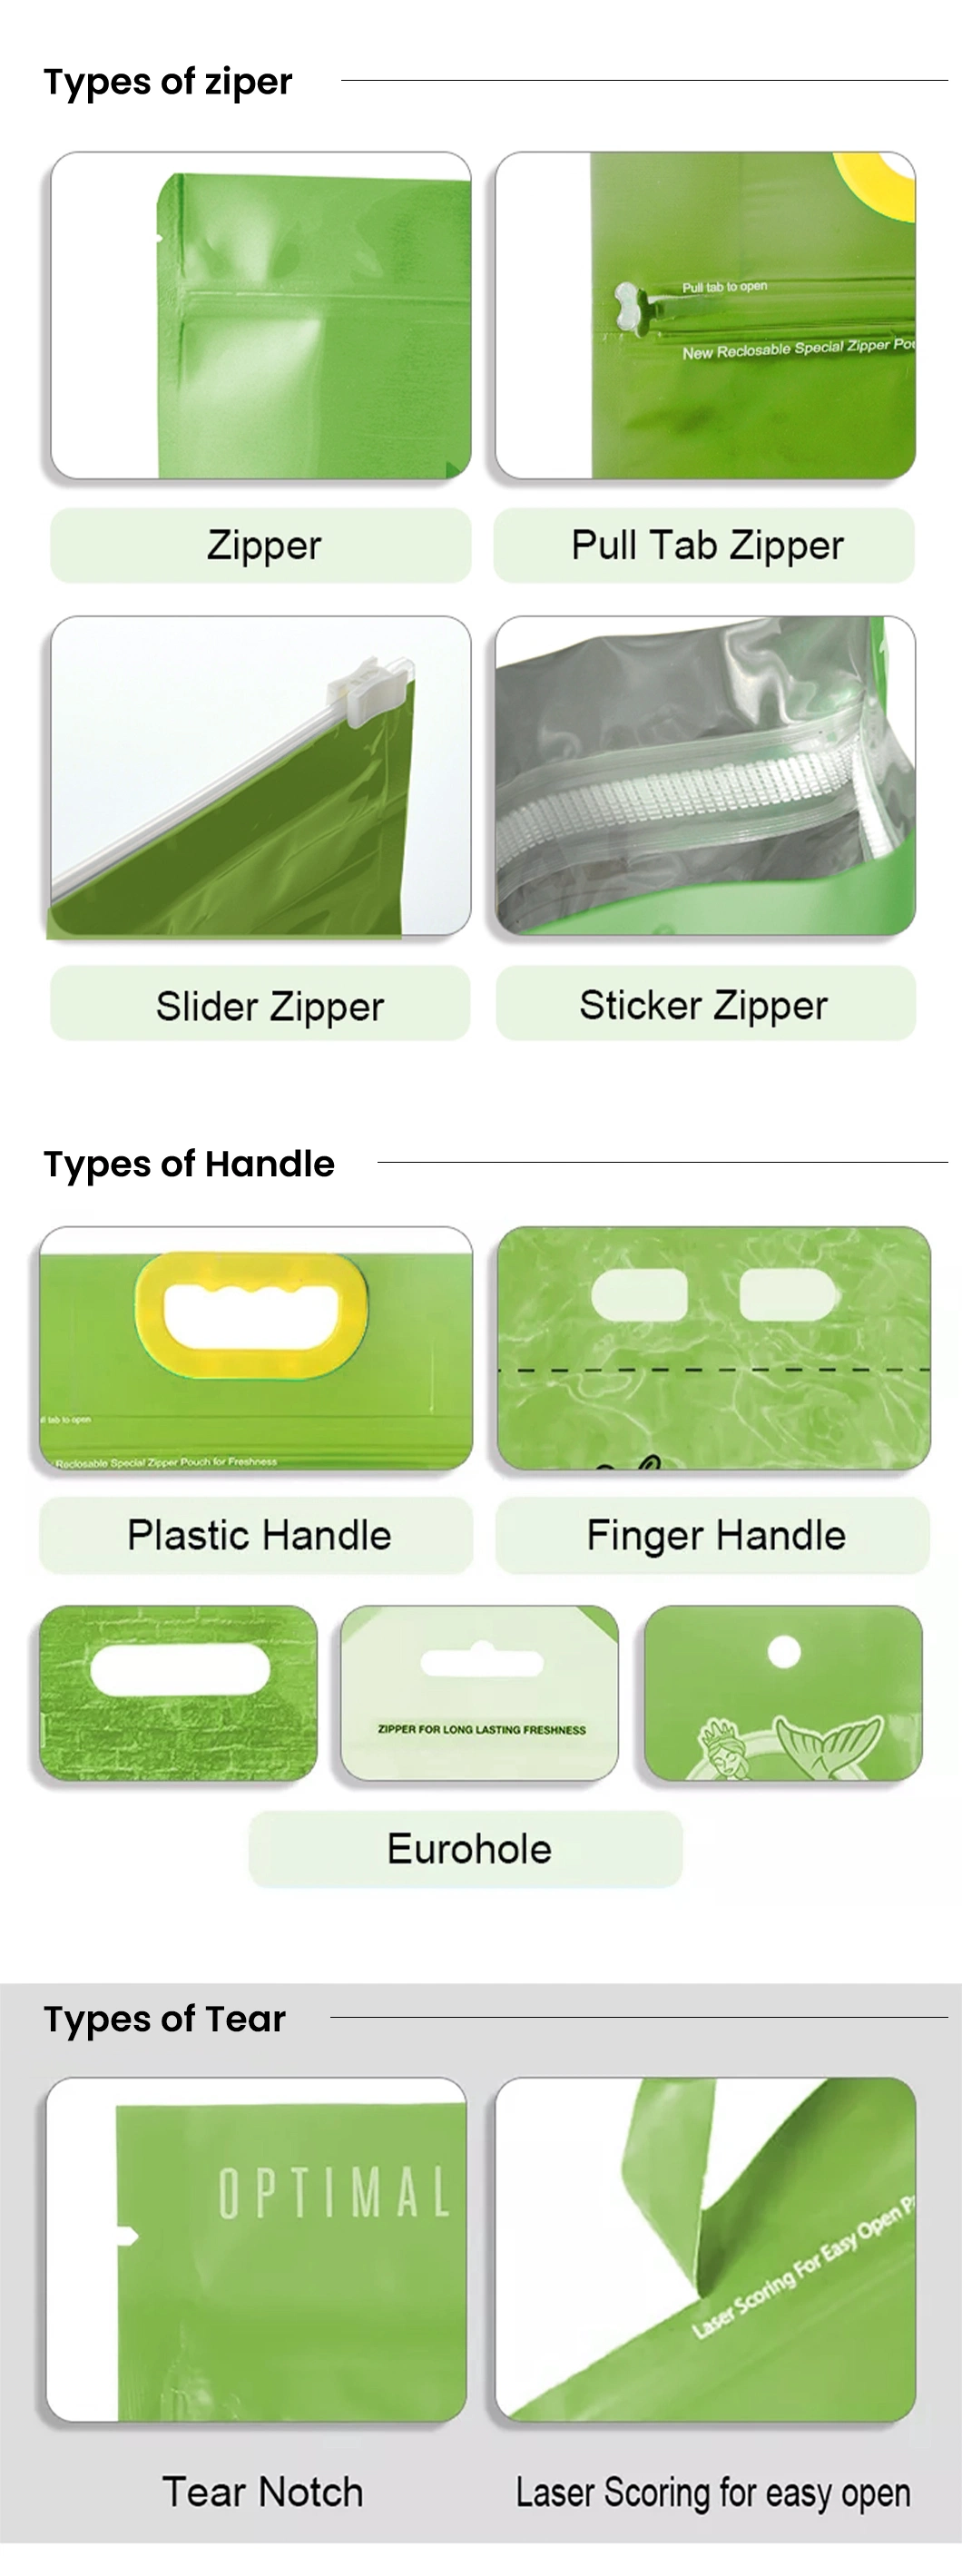 Custom Stand up Aluminum Loose Leaf Tea Plastic Food Packaging Ziplock Bag